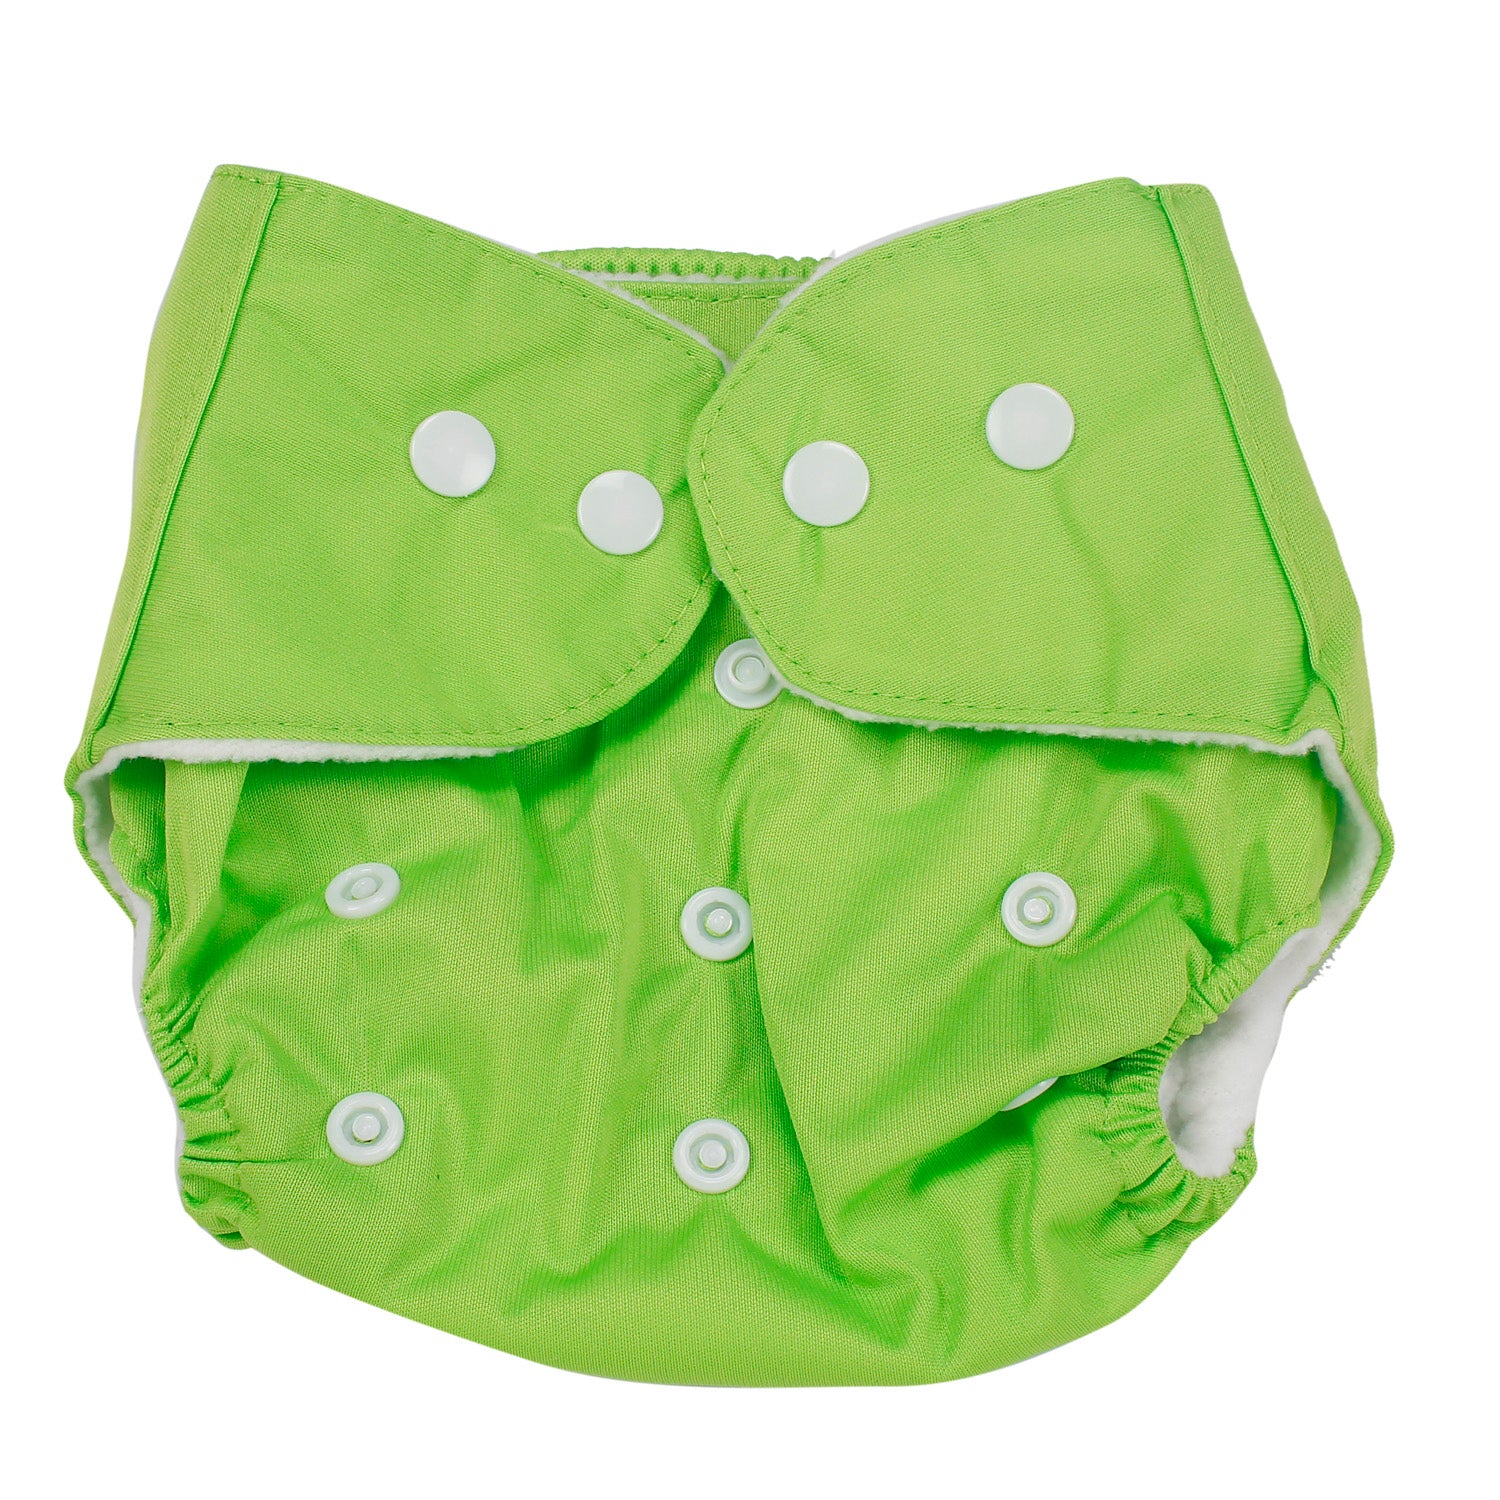 Plain Green Reusable Diaper